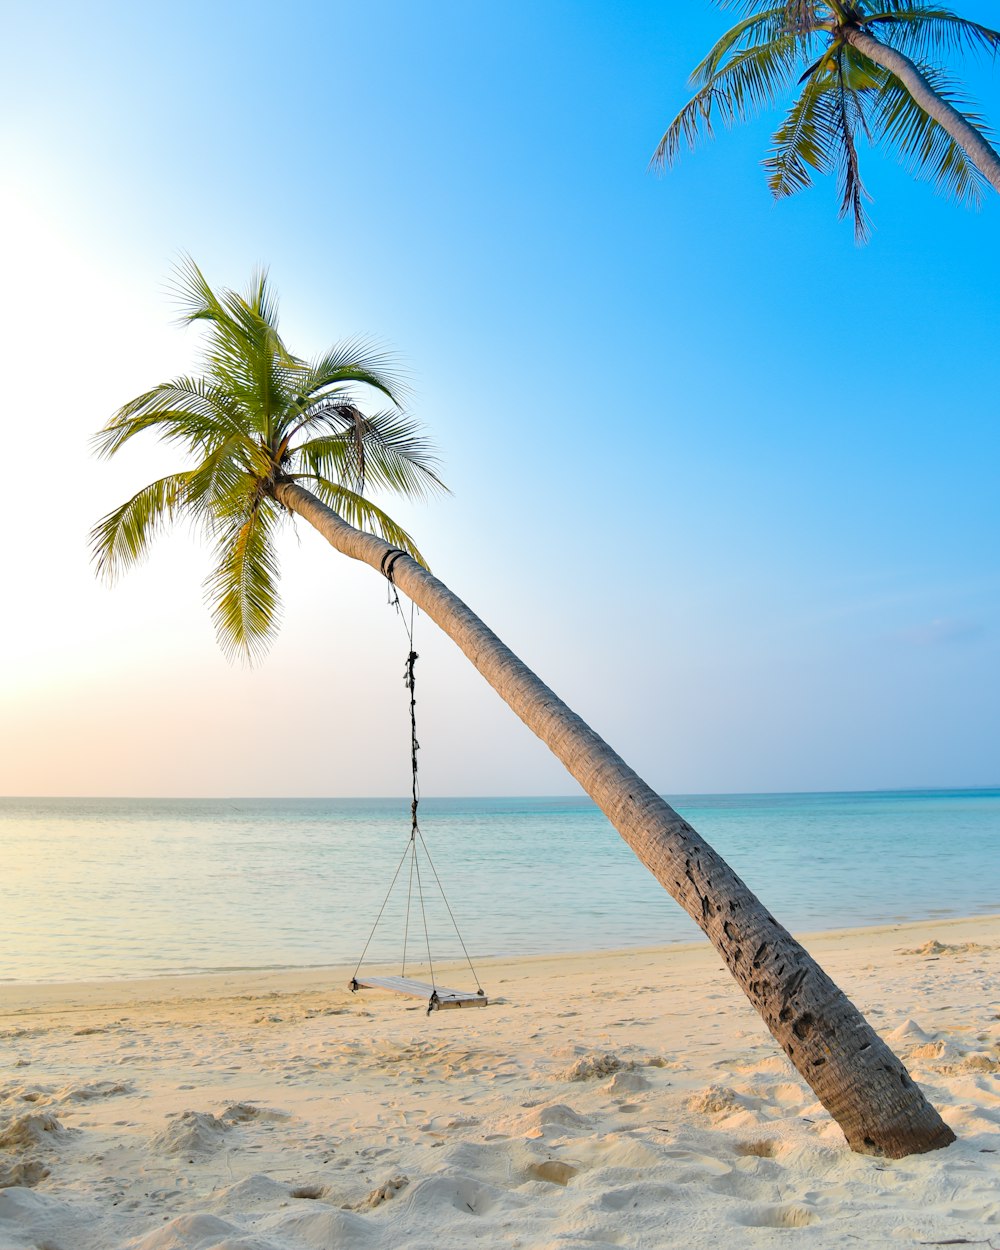 swing hang on coconut tree near seashore